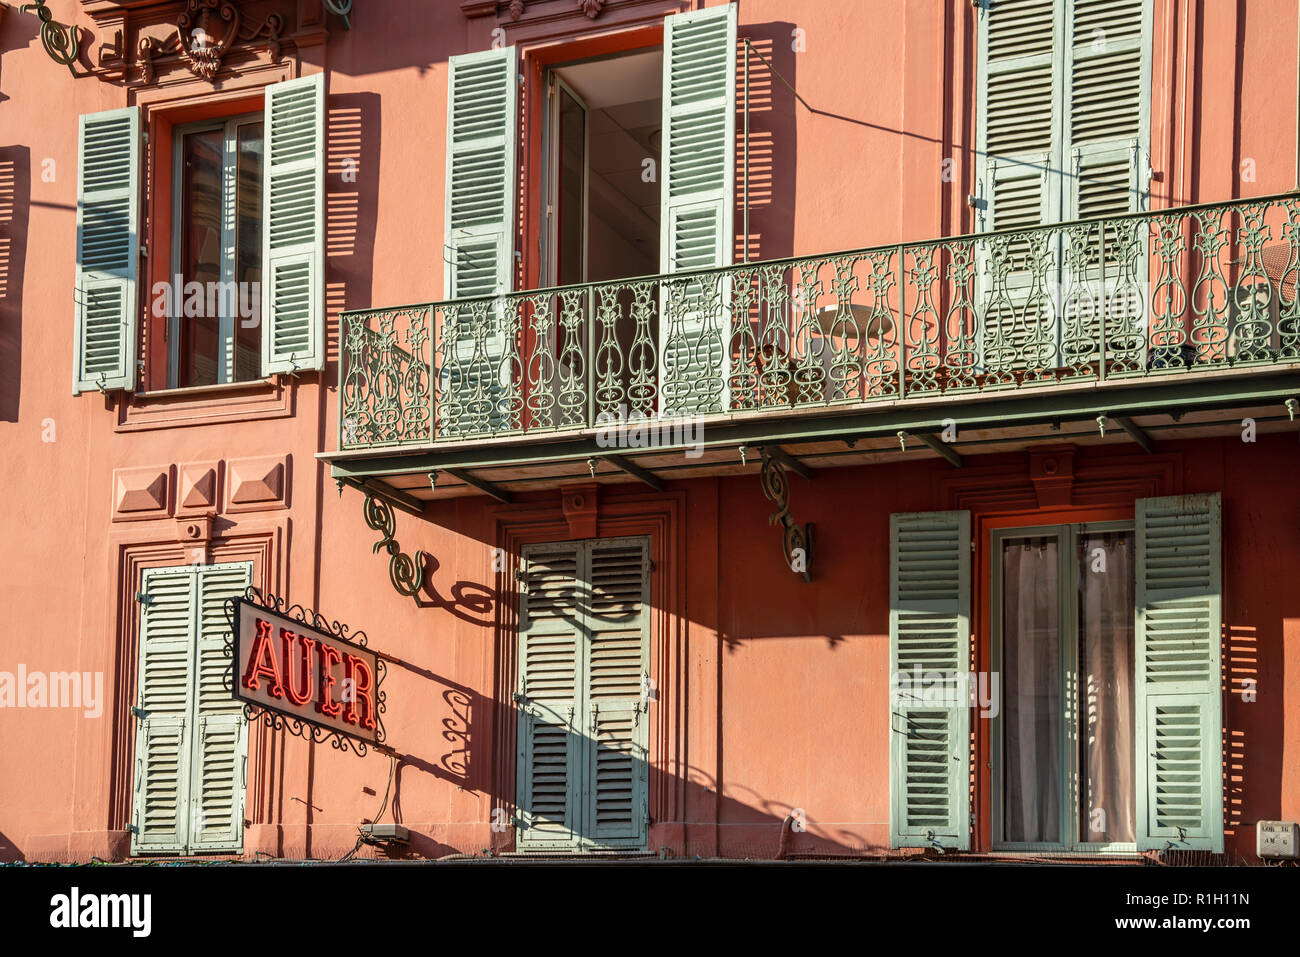 Confisserie Auer, Vieux Nice, Fassade, Cote d'Azur, Frankreich Stockfoto